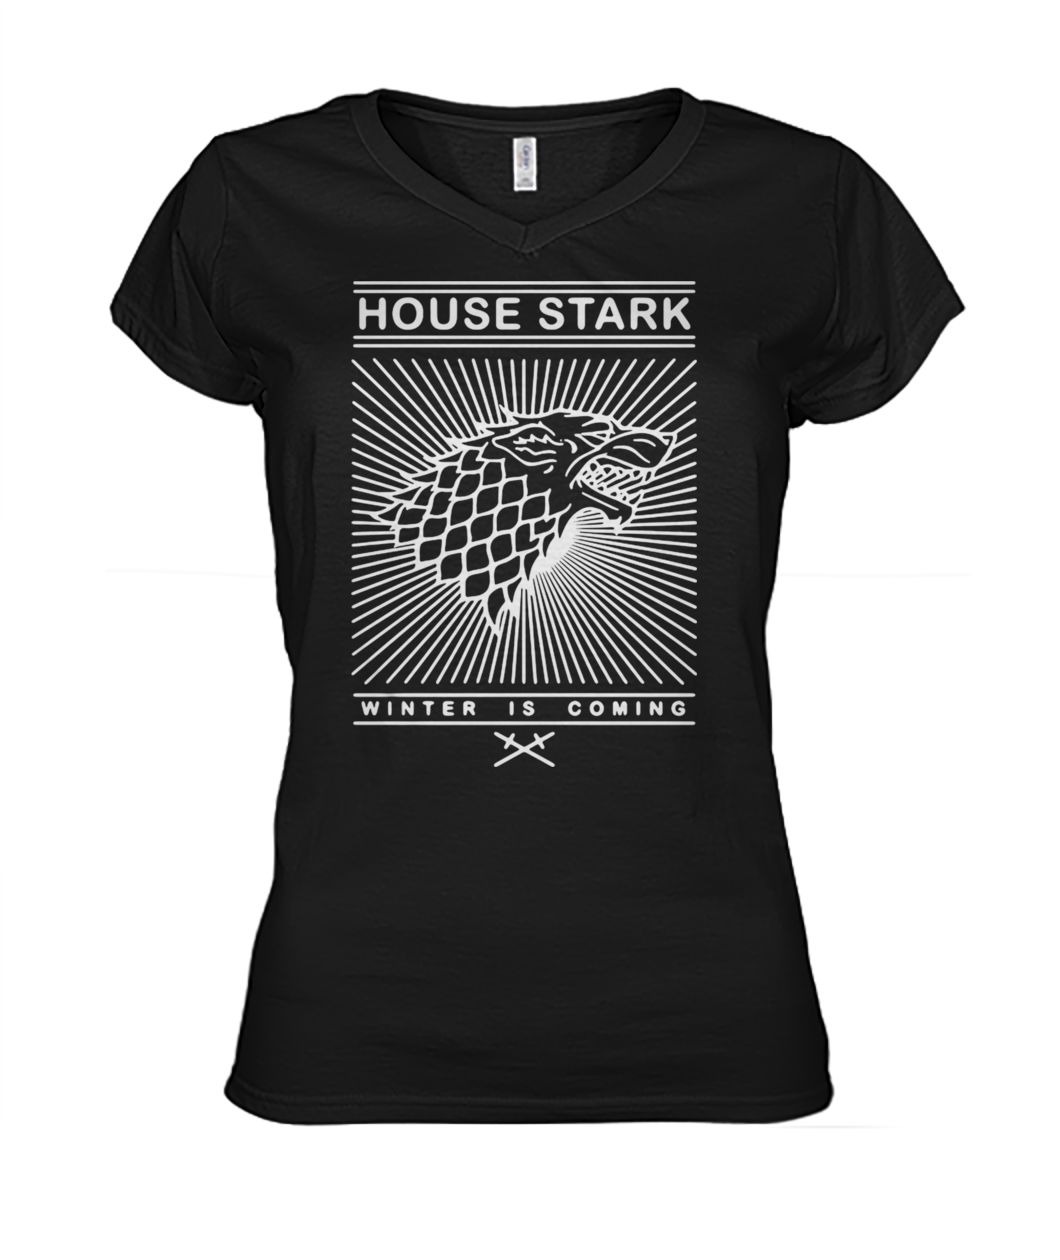 Game of thrones house stark winter is coming women's v-neck